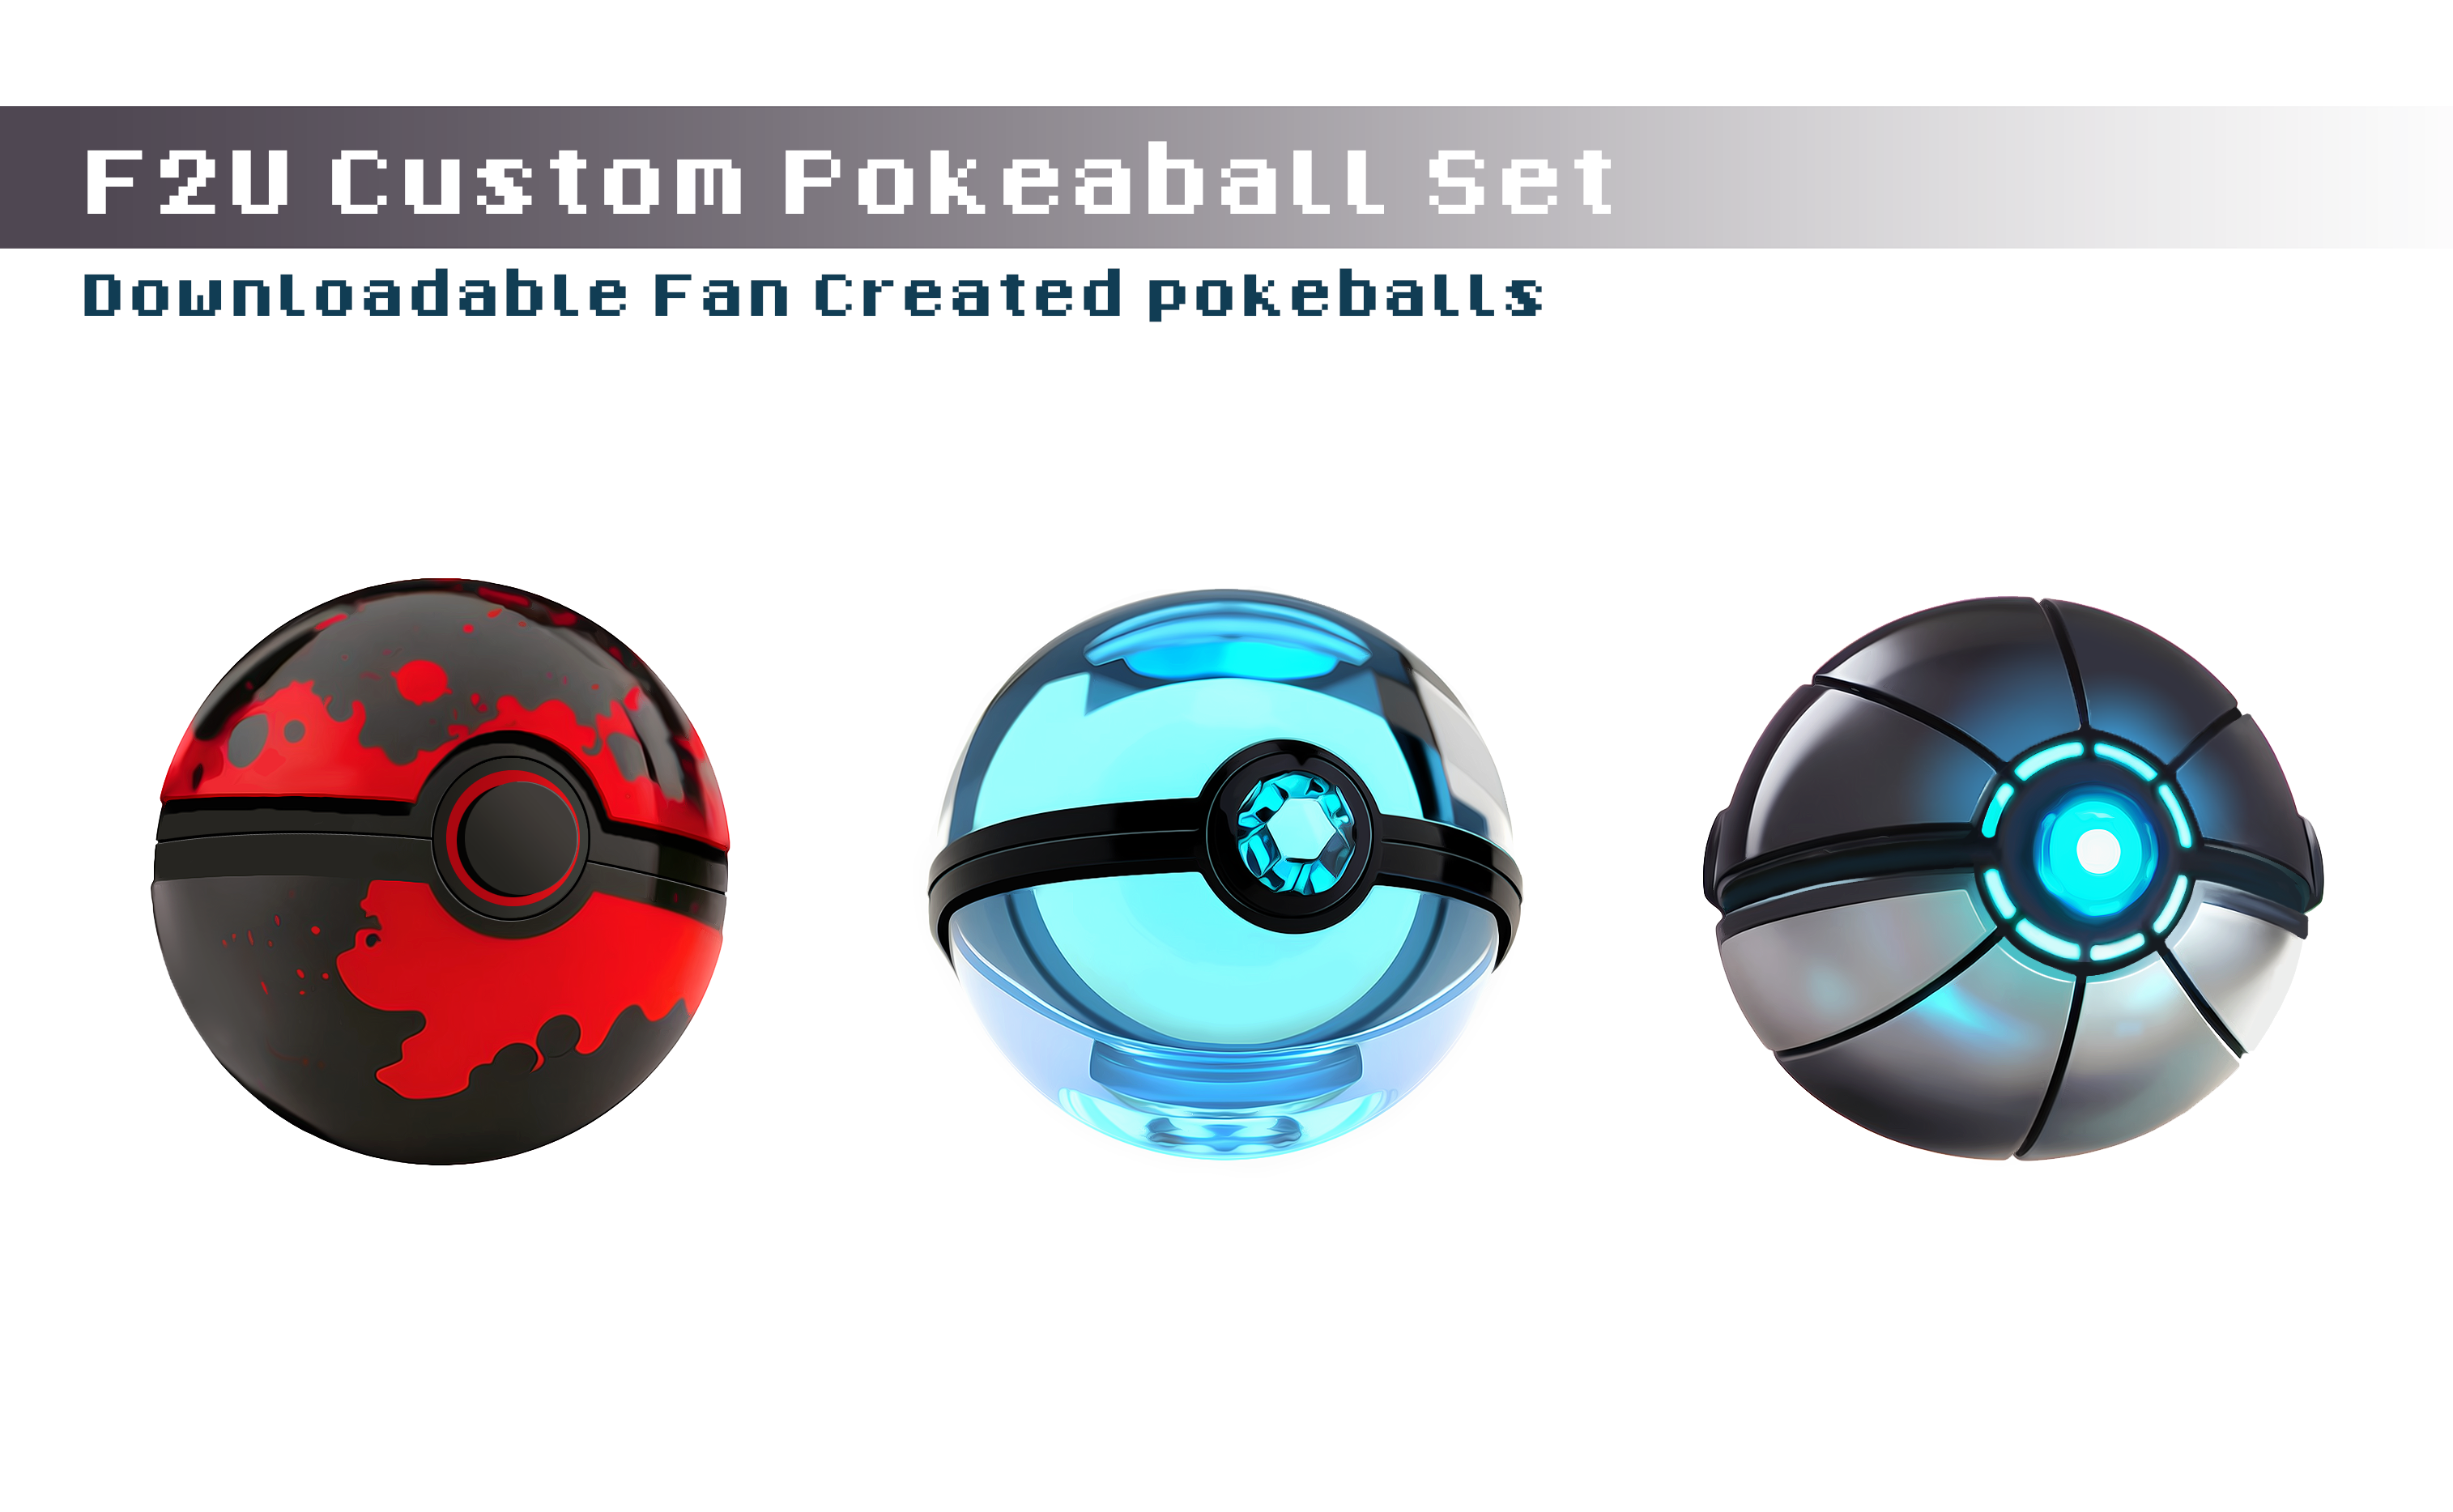 Free Custom Pokeballs [F2U][Download] by LeviathansArmory on